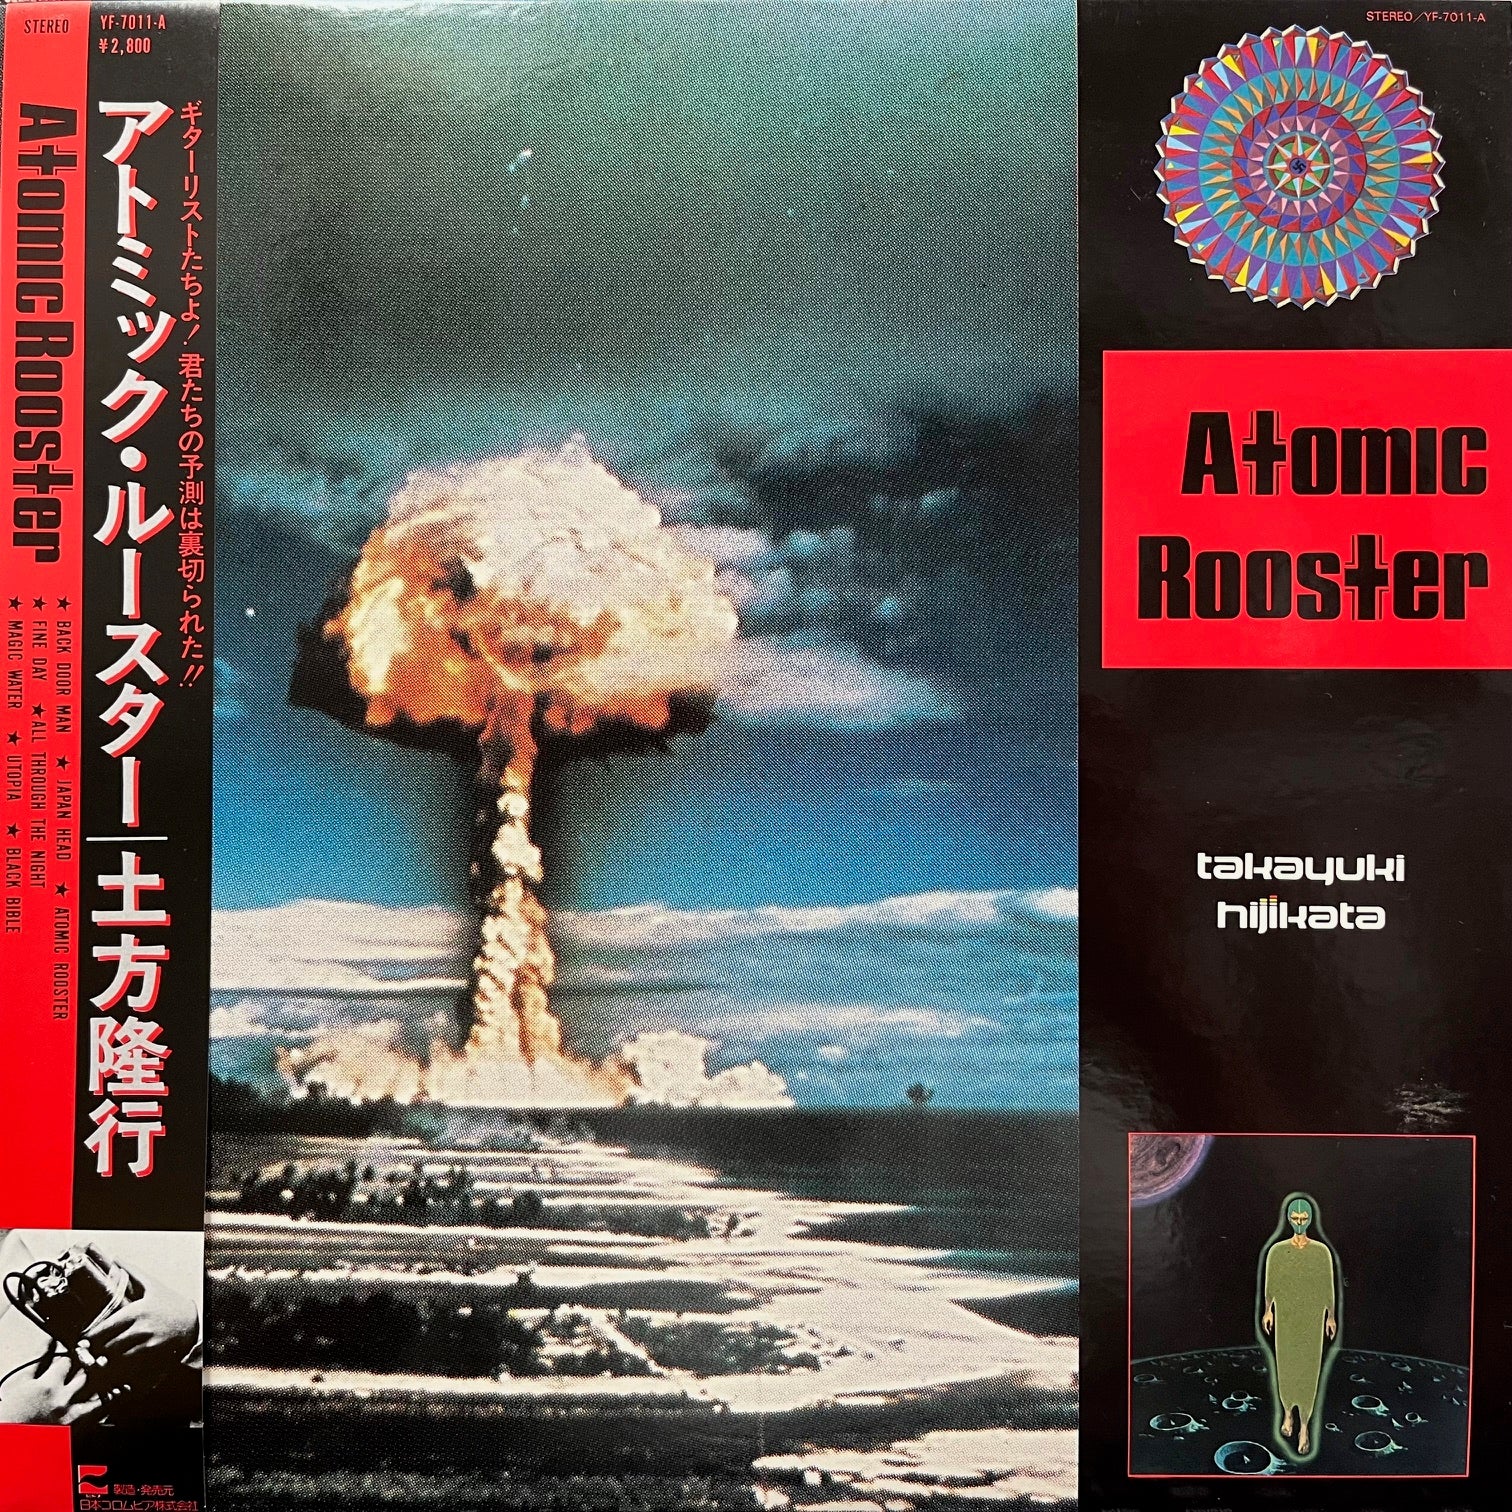 土方隆行 / Atomic Rooster (AX-7251